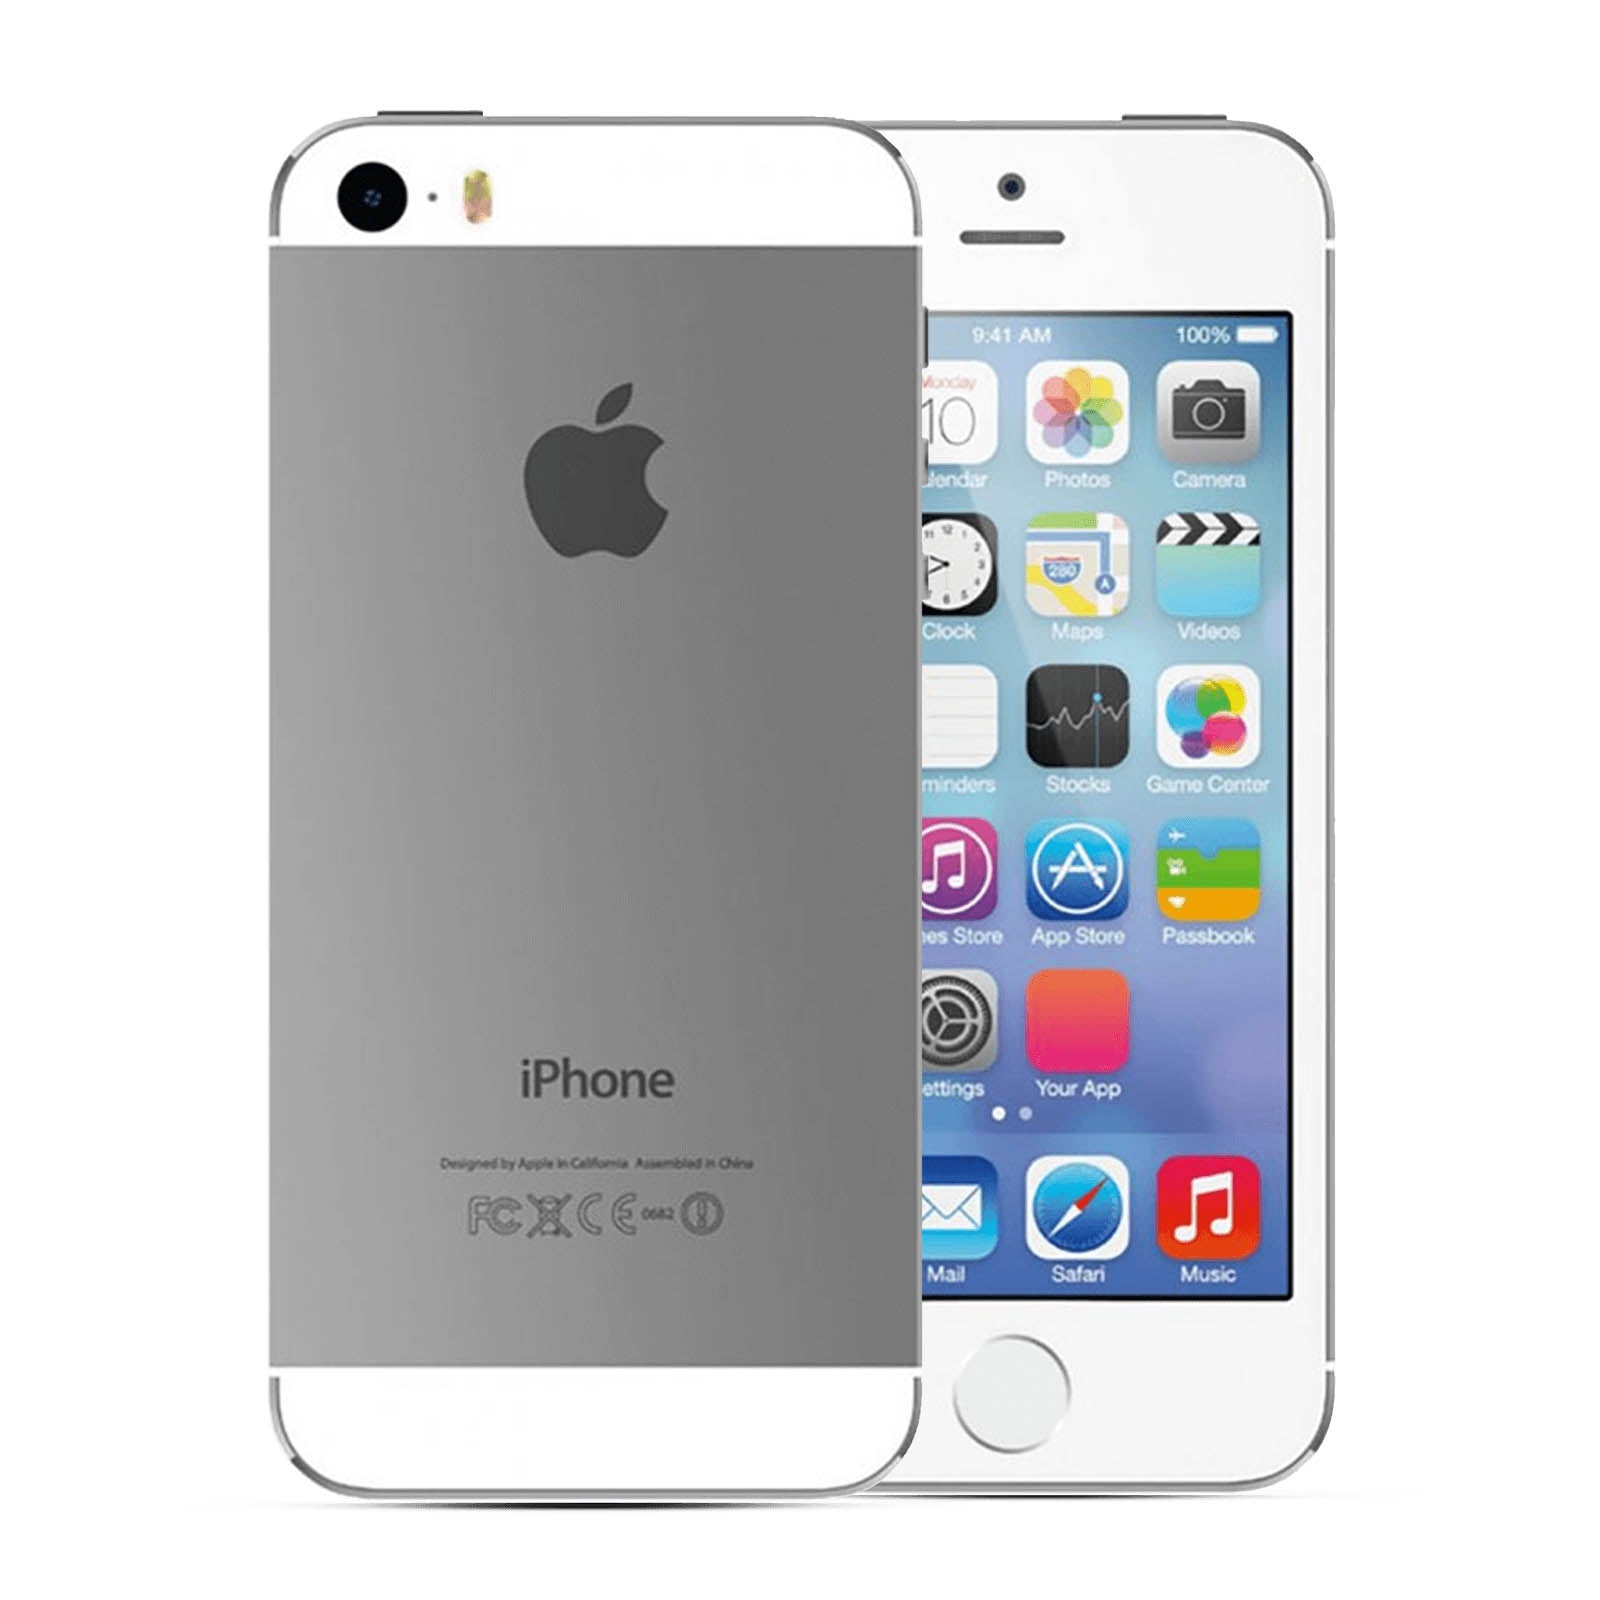 Apple iPhone SE 32GB Silver Good - Unlocked